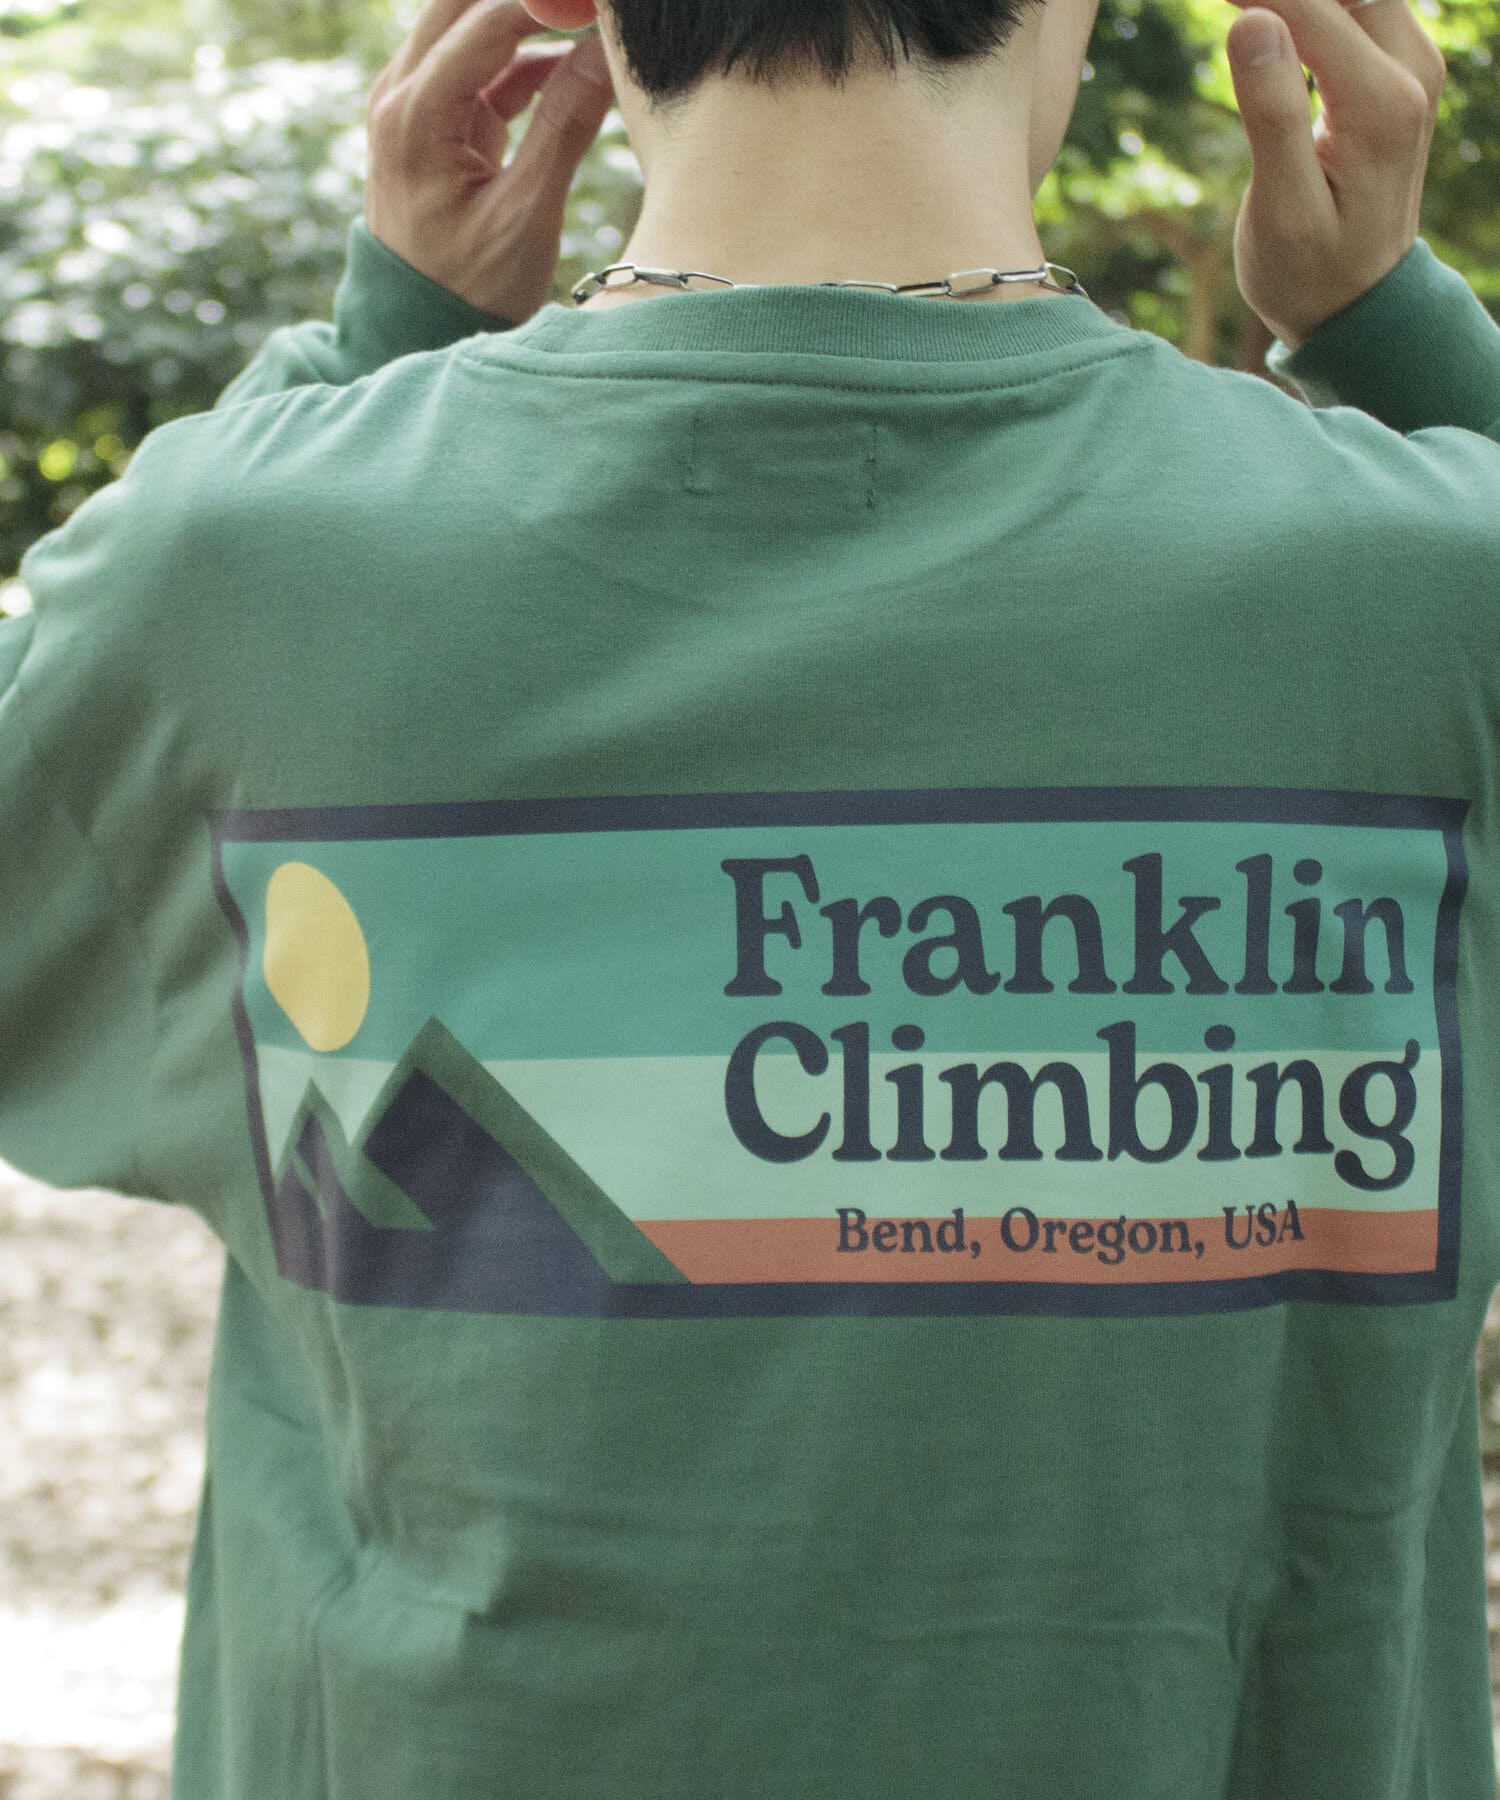 FREDY & GLOSTER(フレディ アンド グロスター) 【Franklin Climbing】バックプリント ロゴロンT